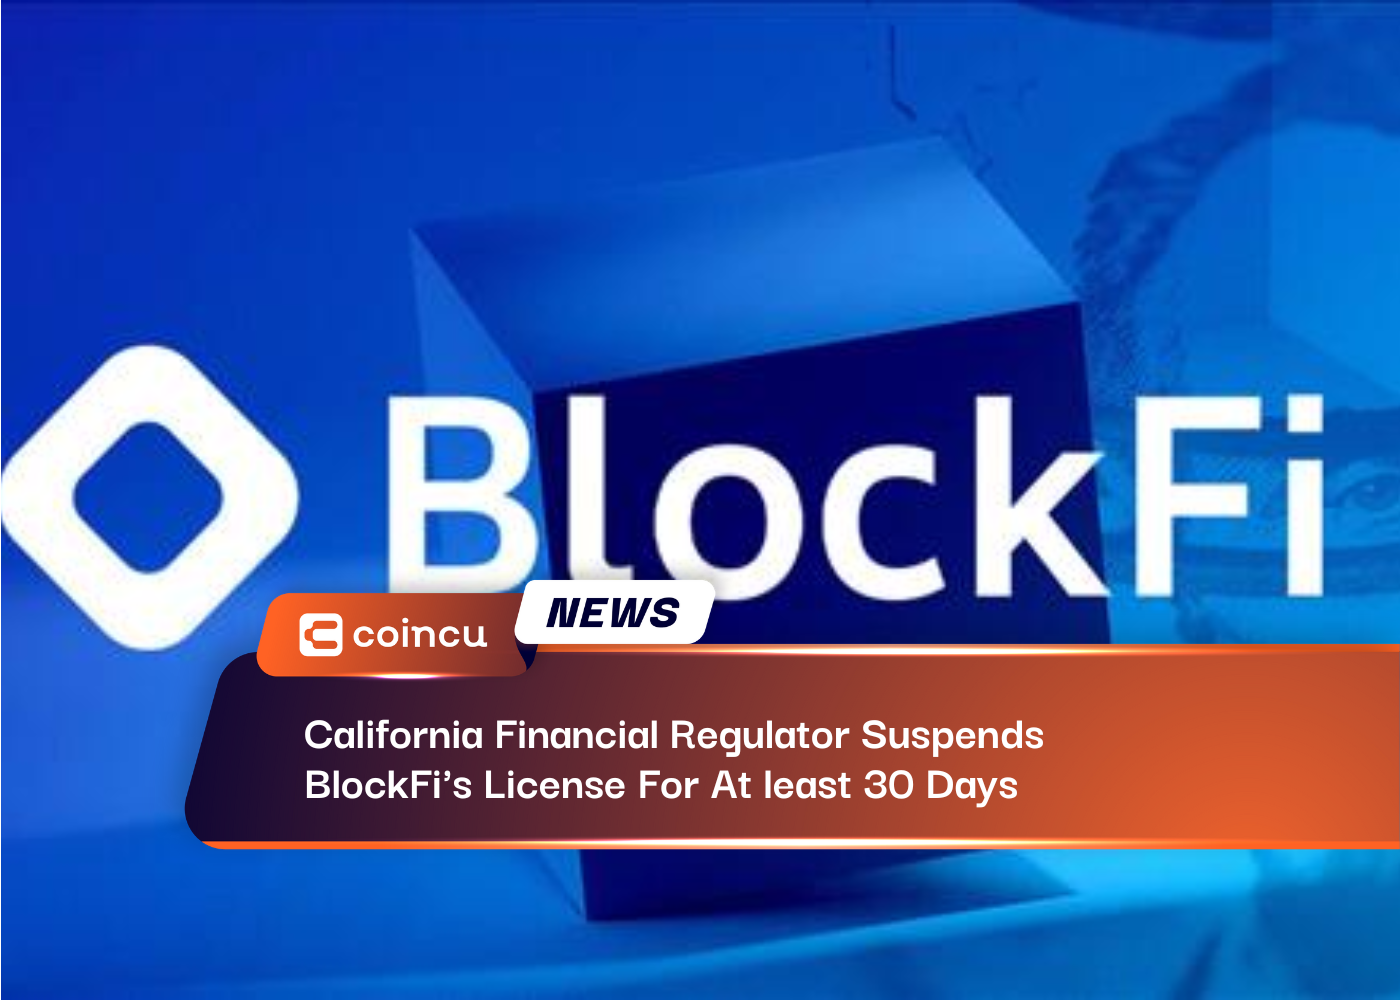 California Financial Regulator Suspends BlockFi's License For At least 30 Days